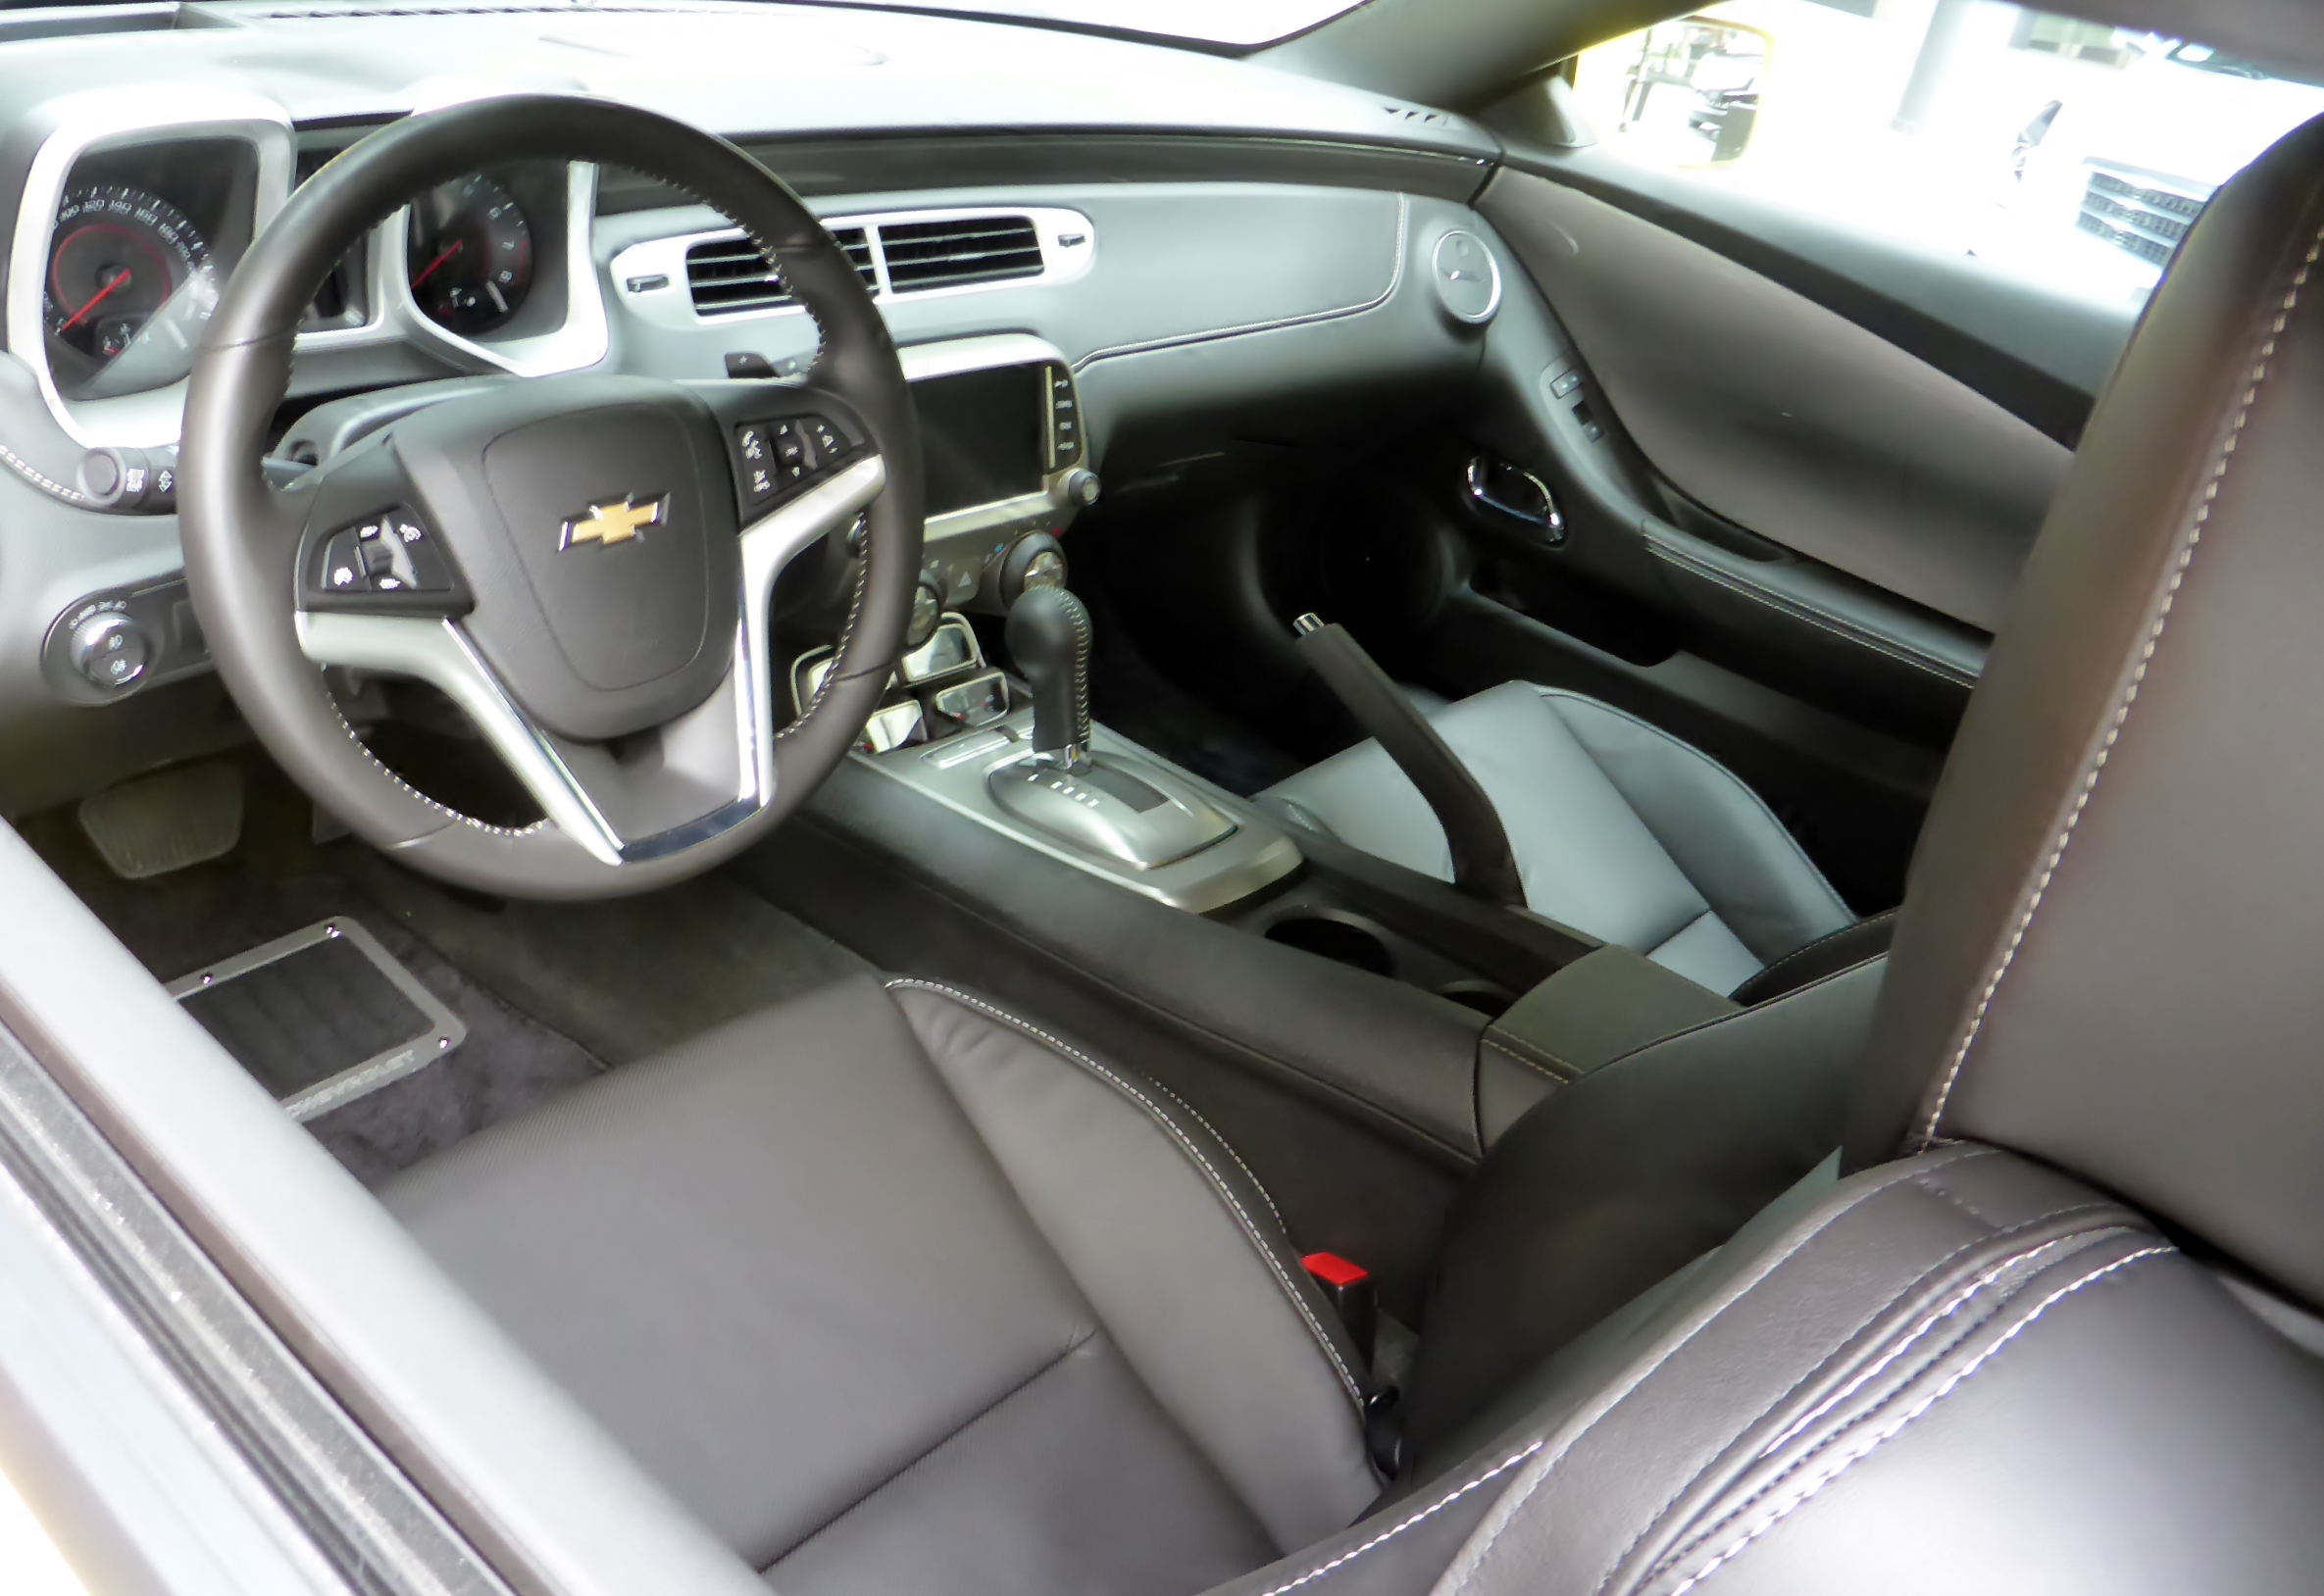 File:The interior of Chevrolet CAMARO V RS.JPG - Wikimedia Commons